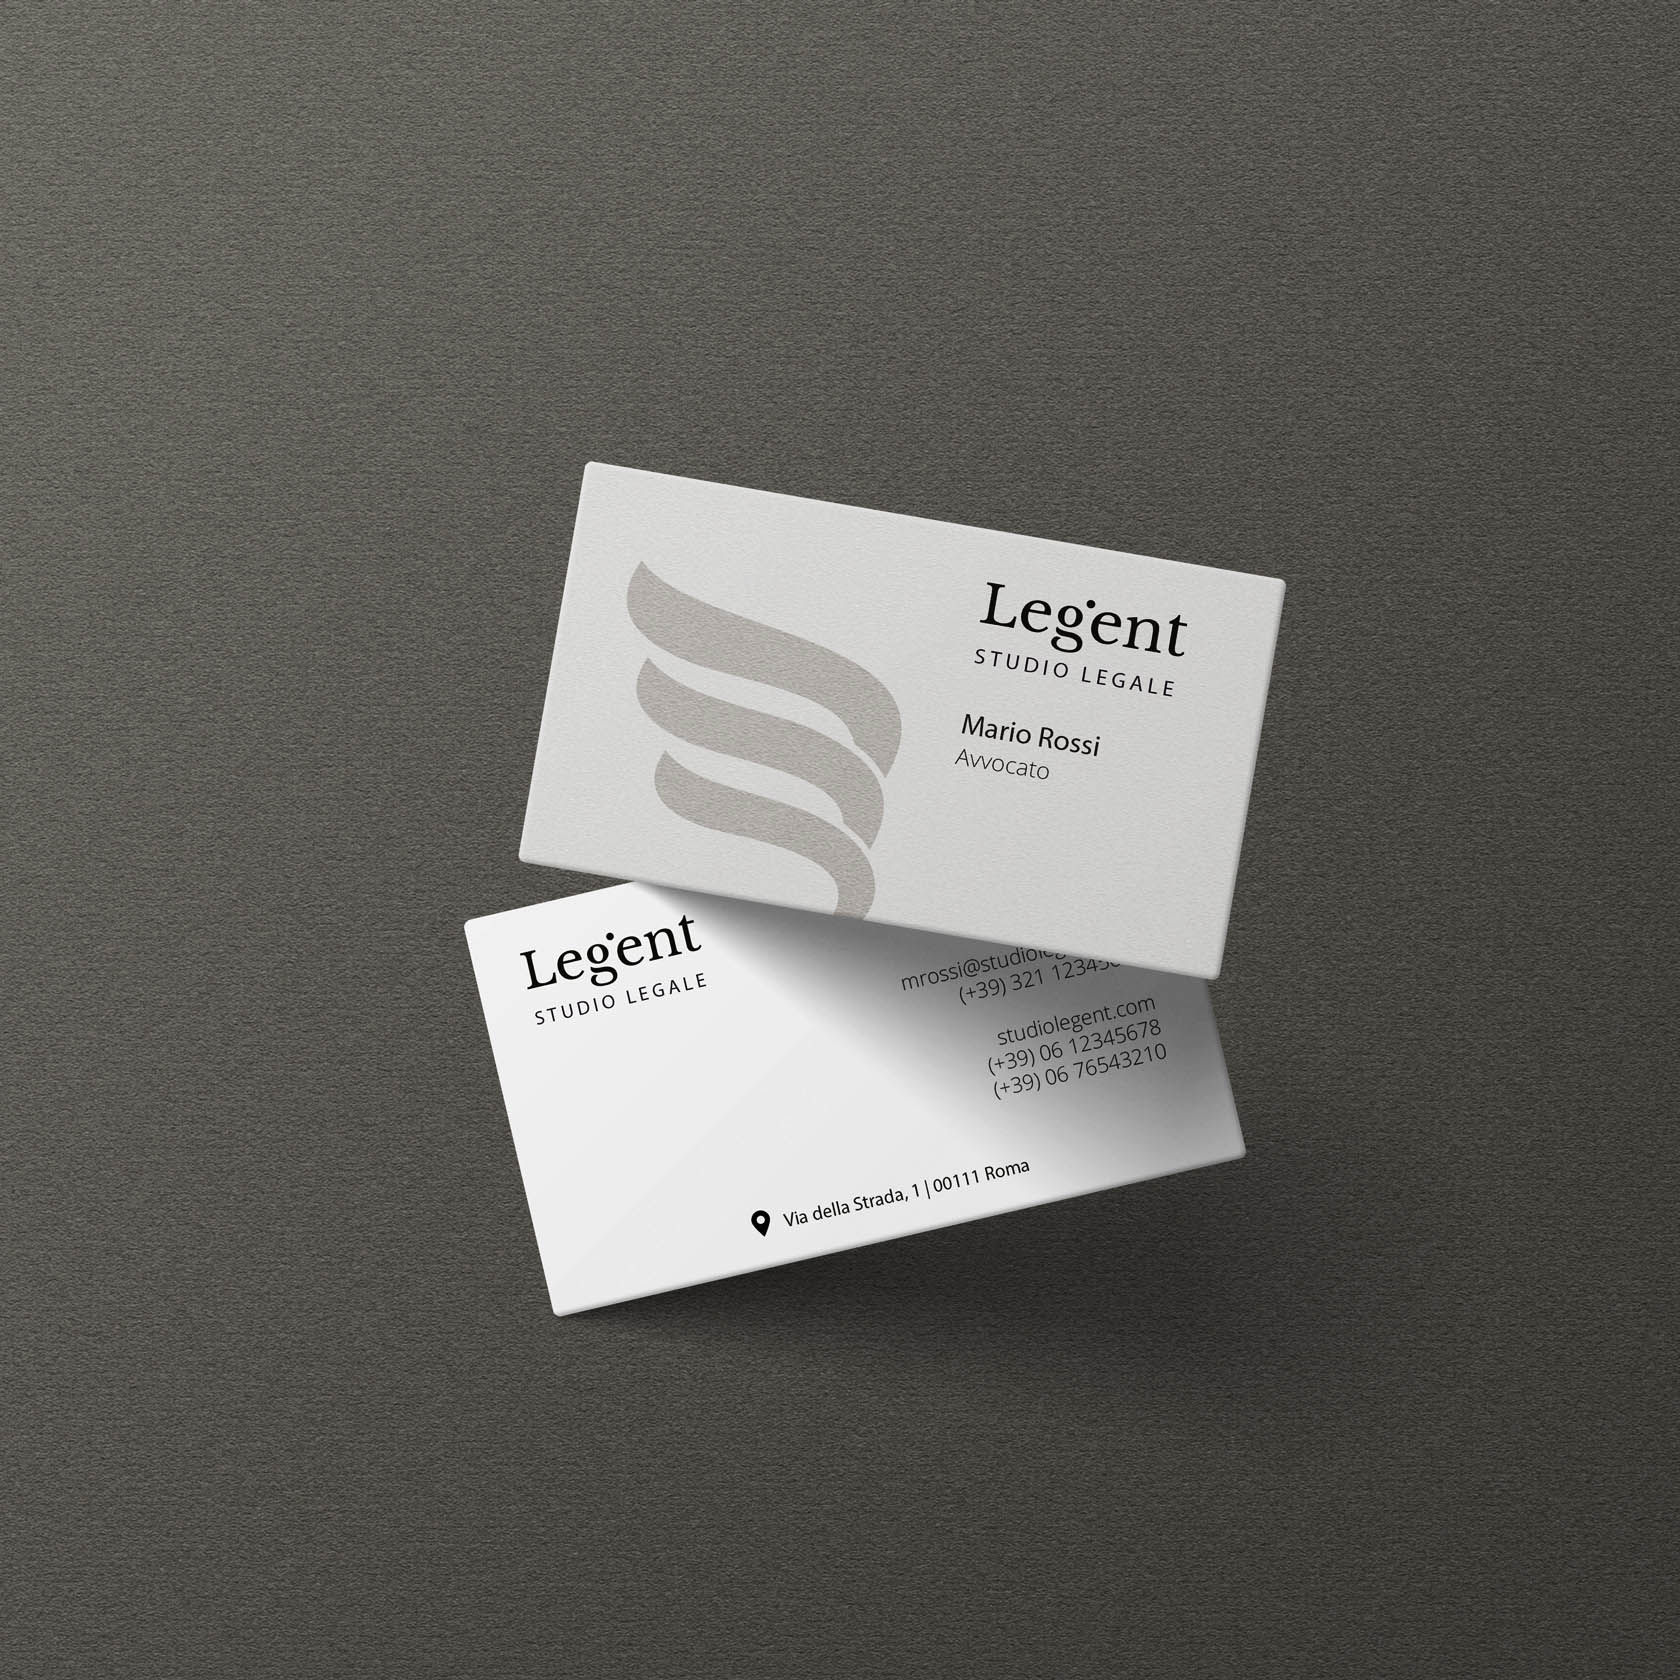 Studio Legent - Brand Identity Studio Legale - Business cards